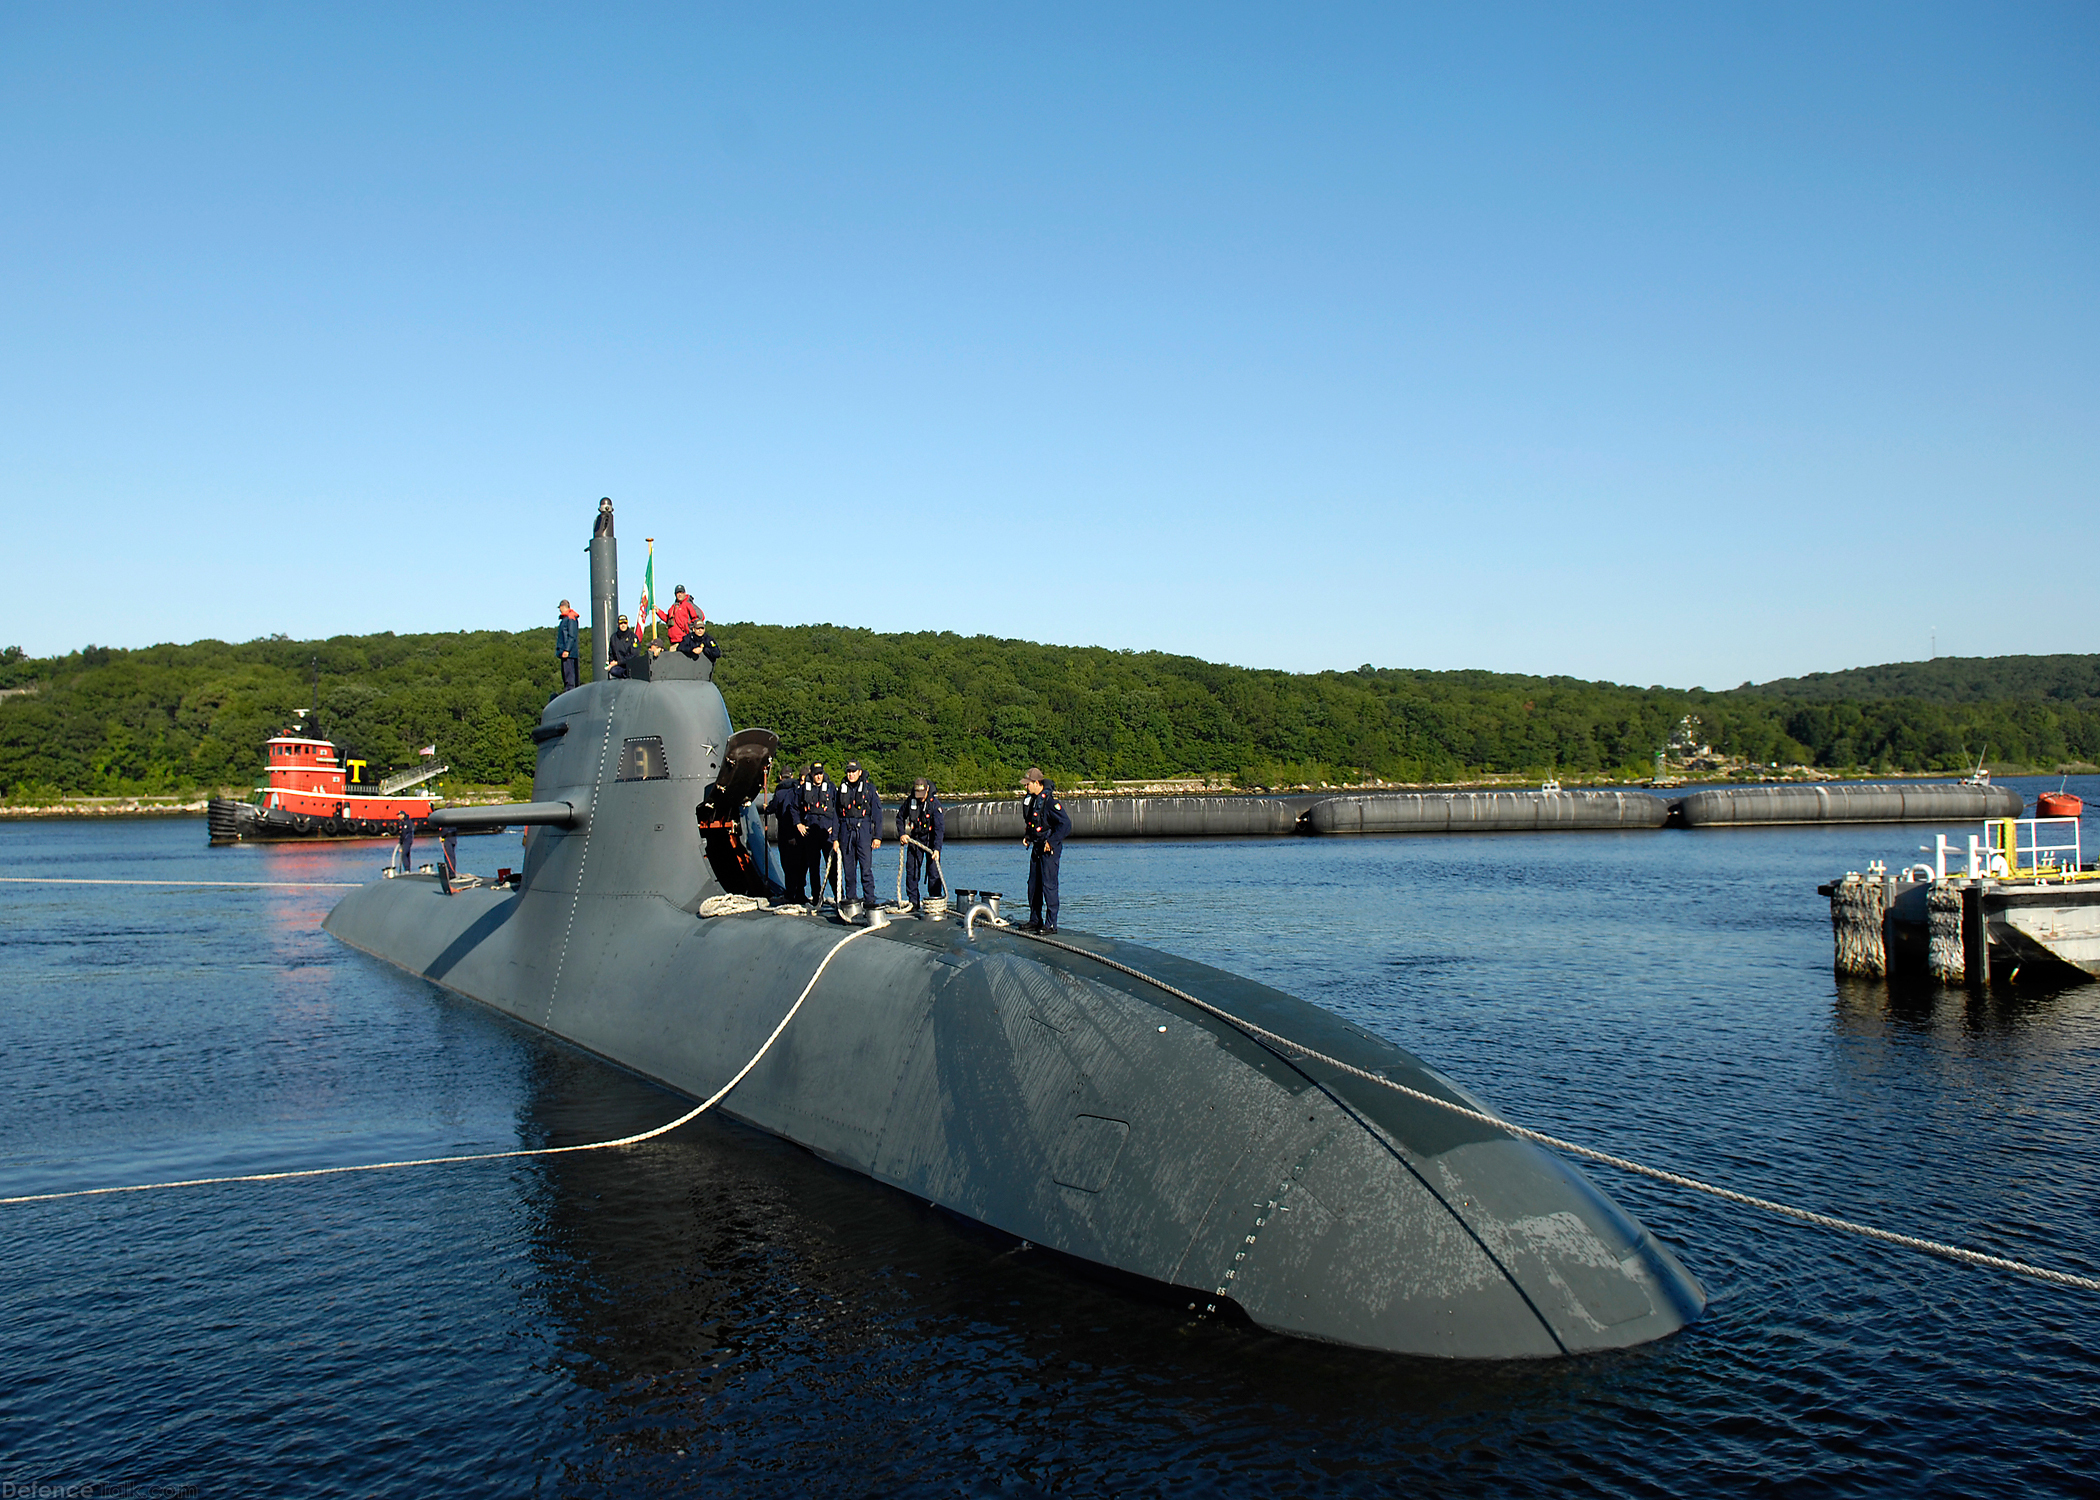 U212A Submarine at Naval Submarine Base - Italian Navy